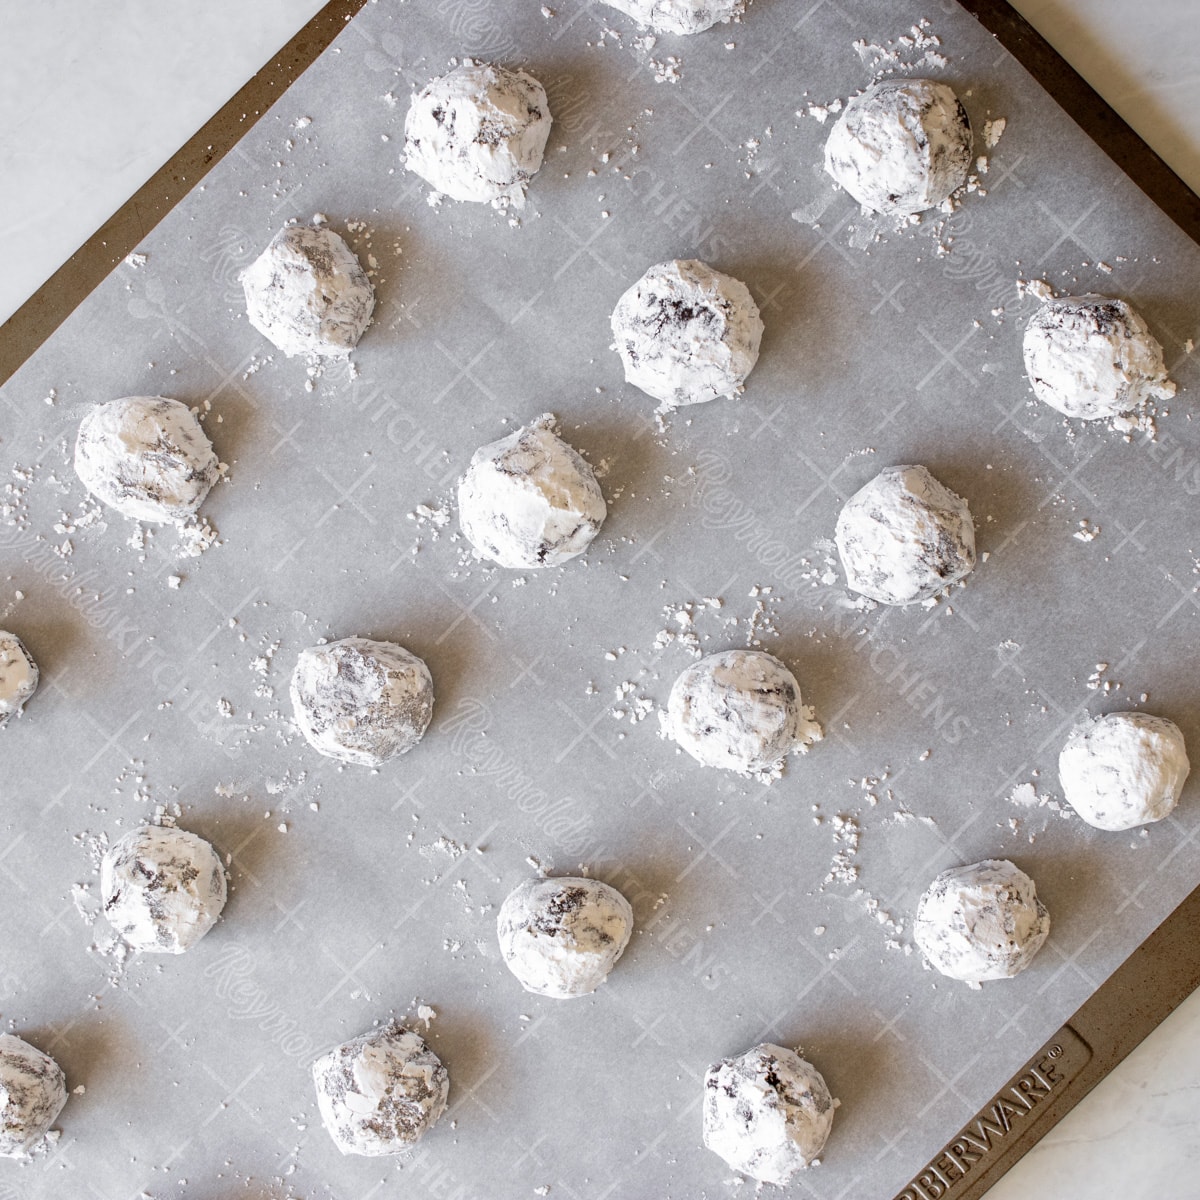 cookie dough balls rolled in powdered sugar on baking sheet